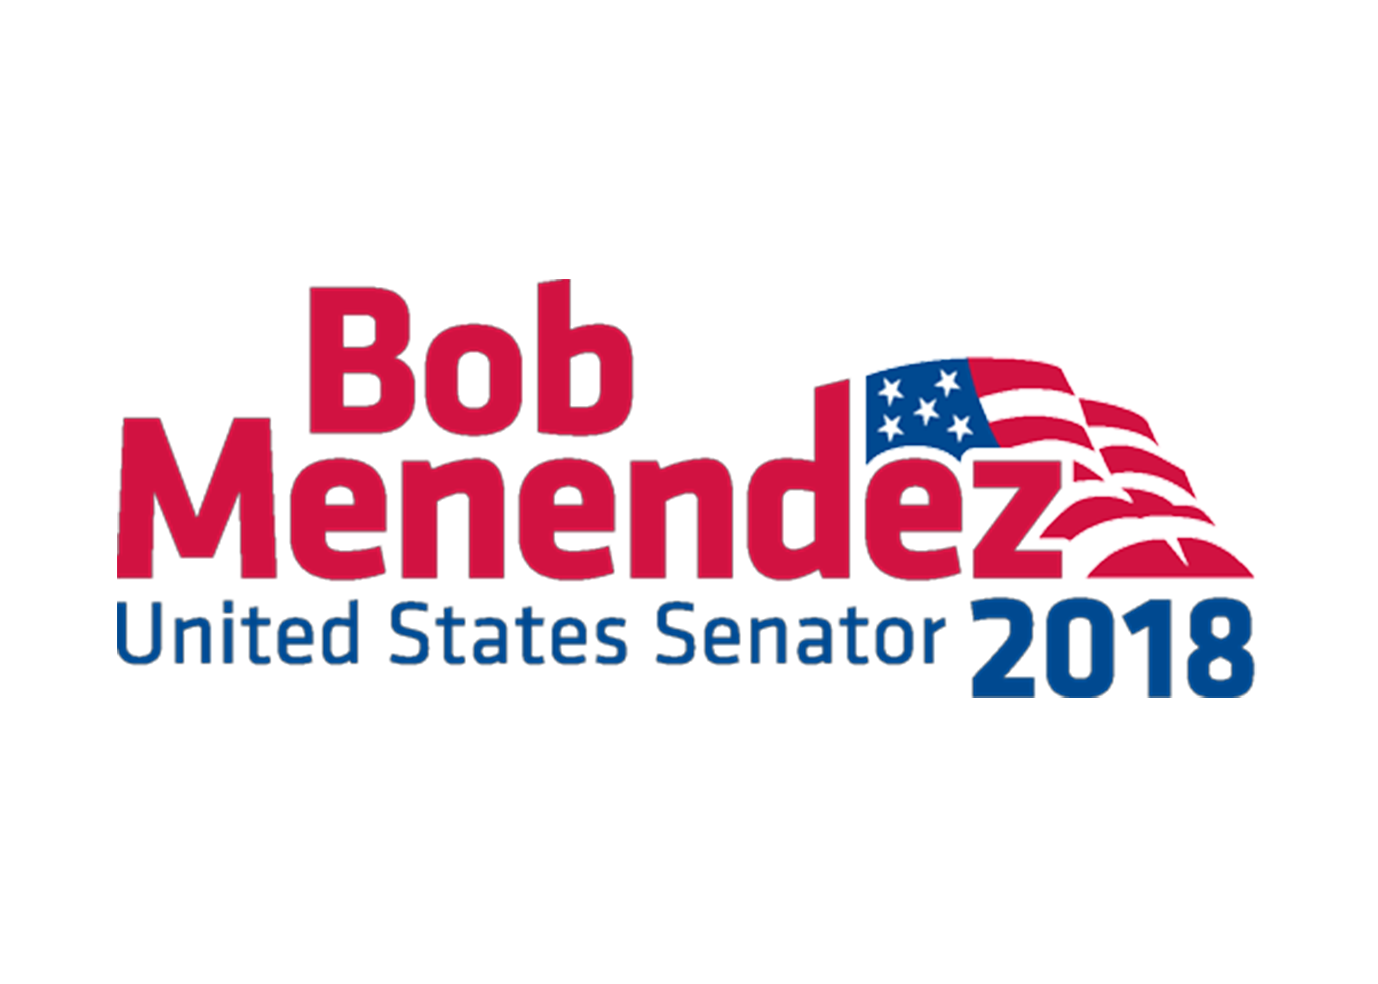 Bob Menendez logo